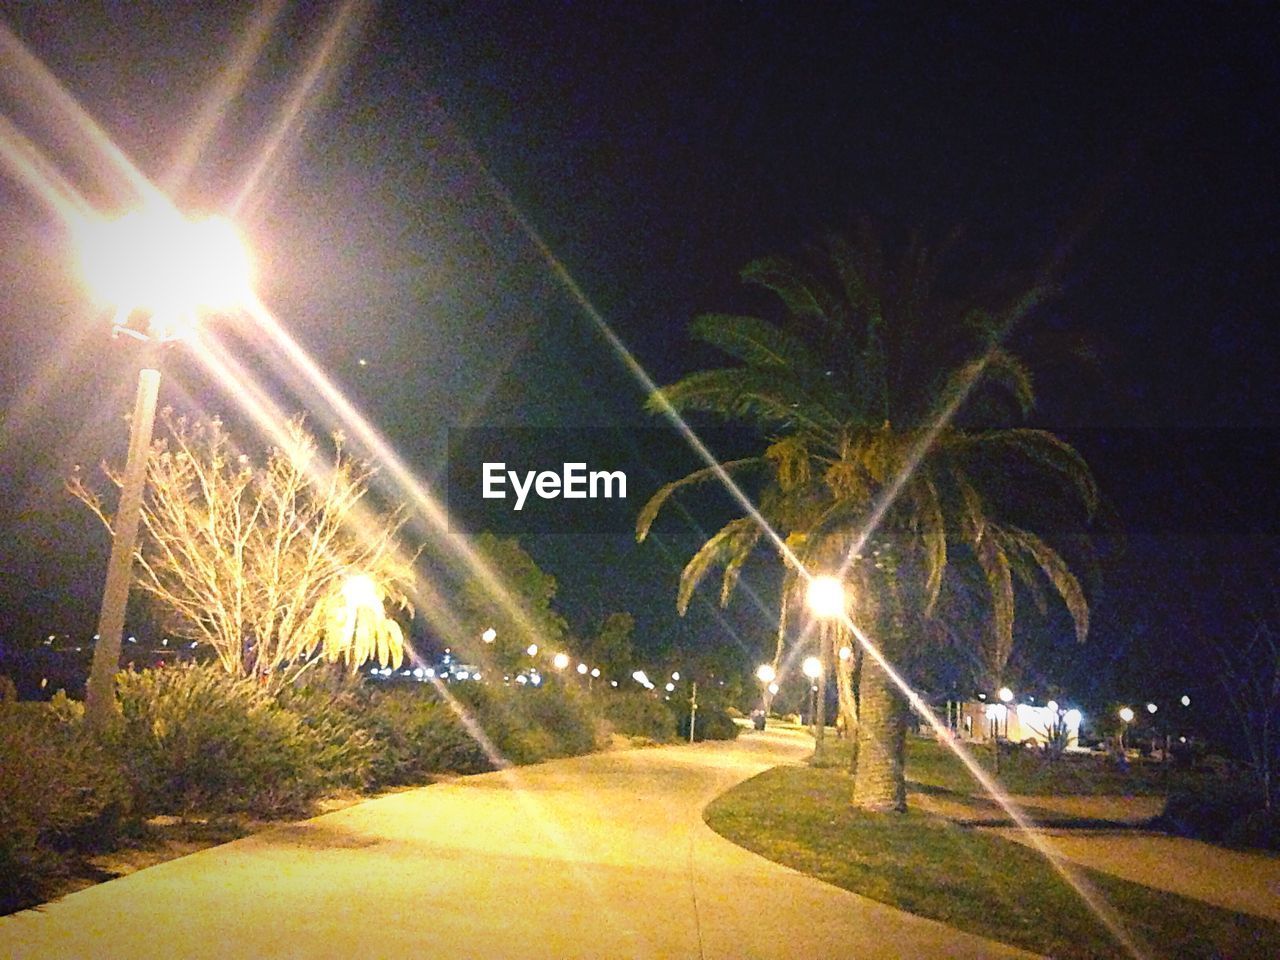 VIEW OF ILLUMINATED STREET LIGHTS AT NIGHT